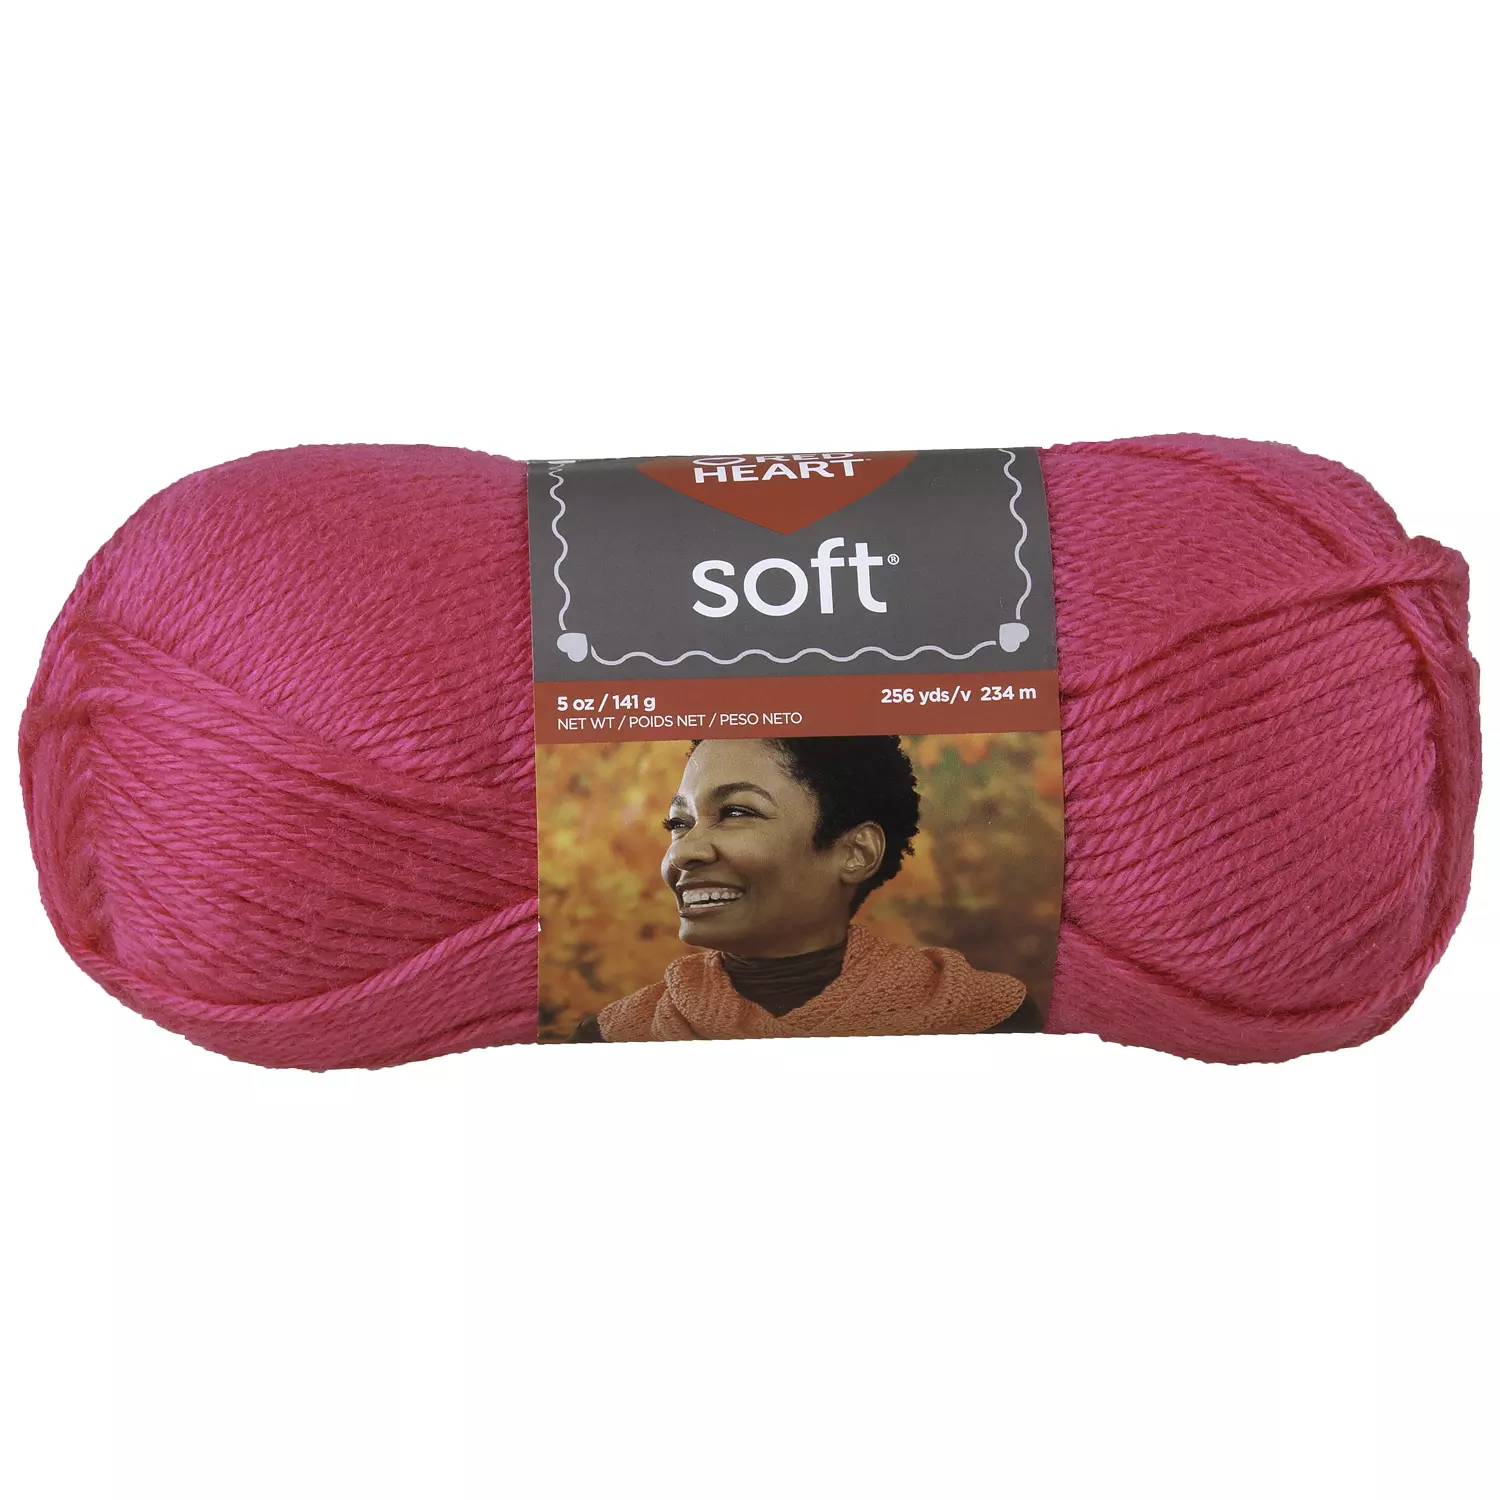 Red Heart Soft - Yarn, very pink